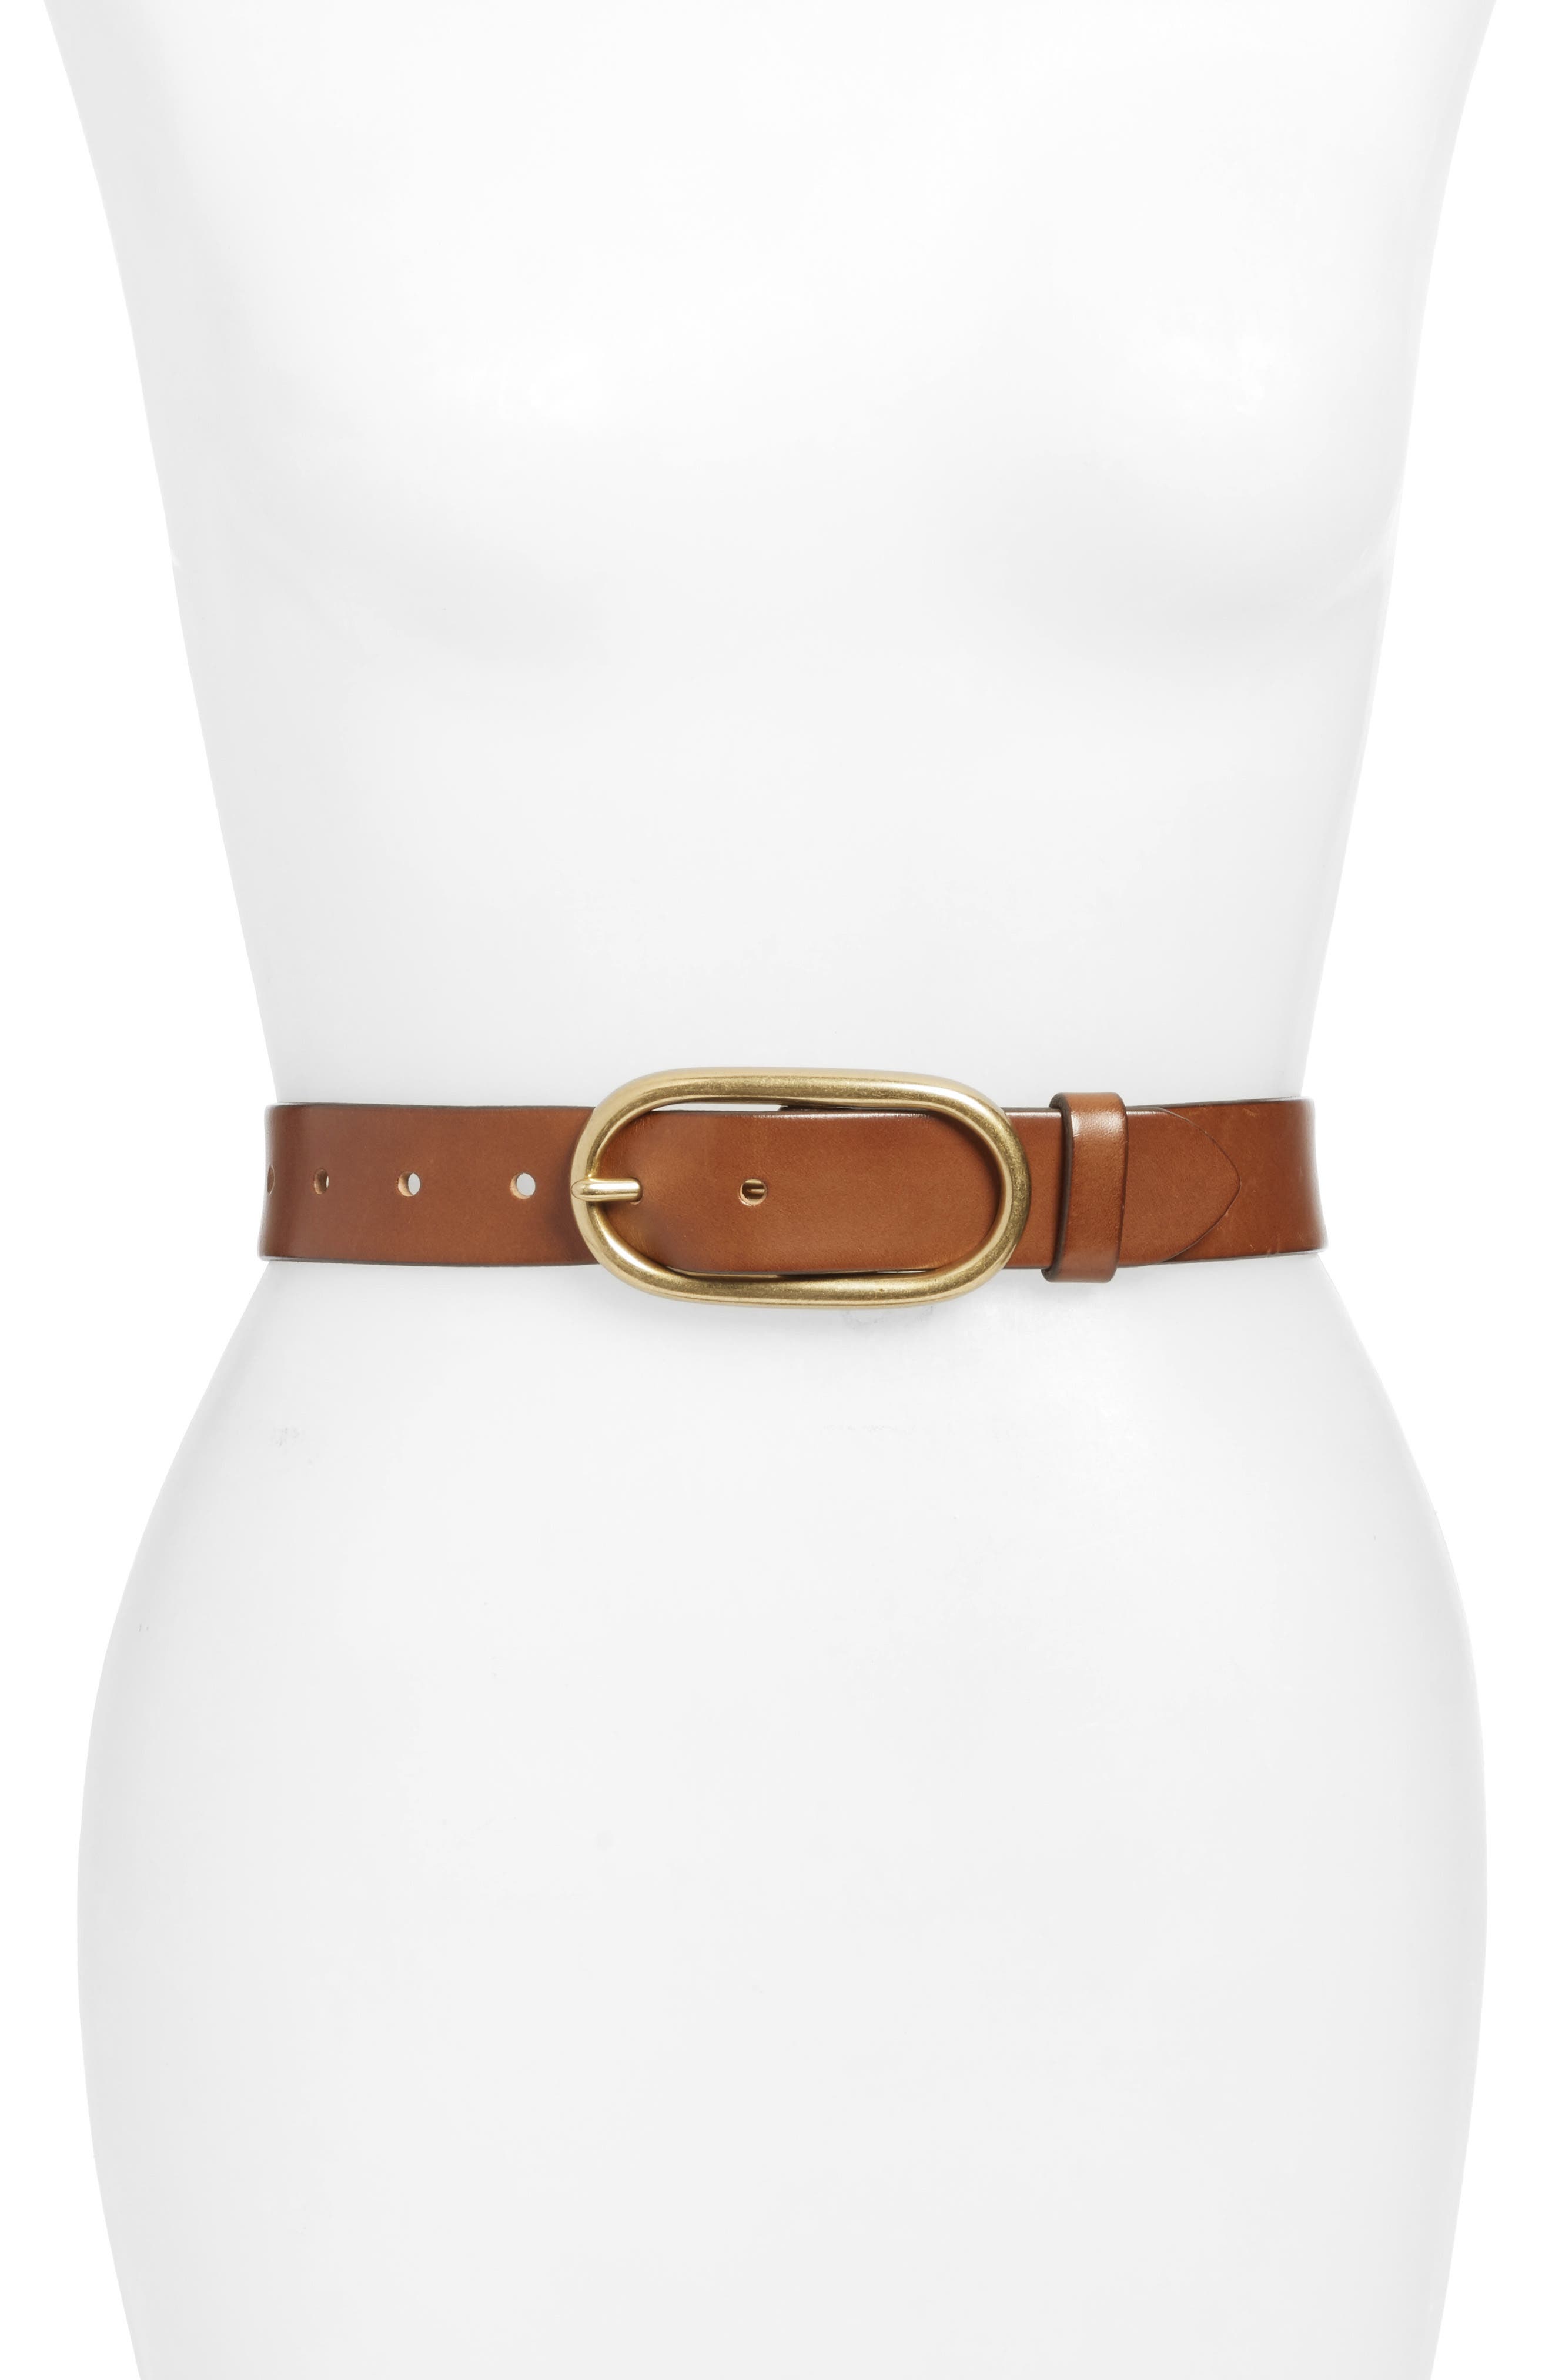 Waist Belt beige embossed logo Accessories Belts Waist Belts 